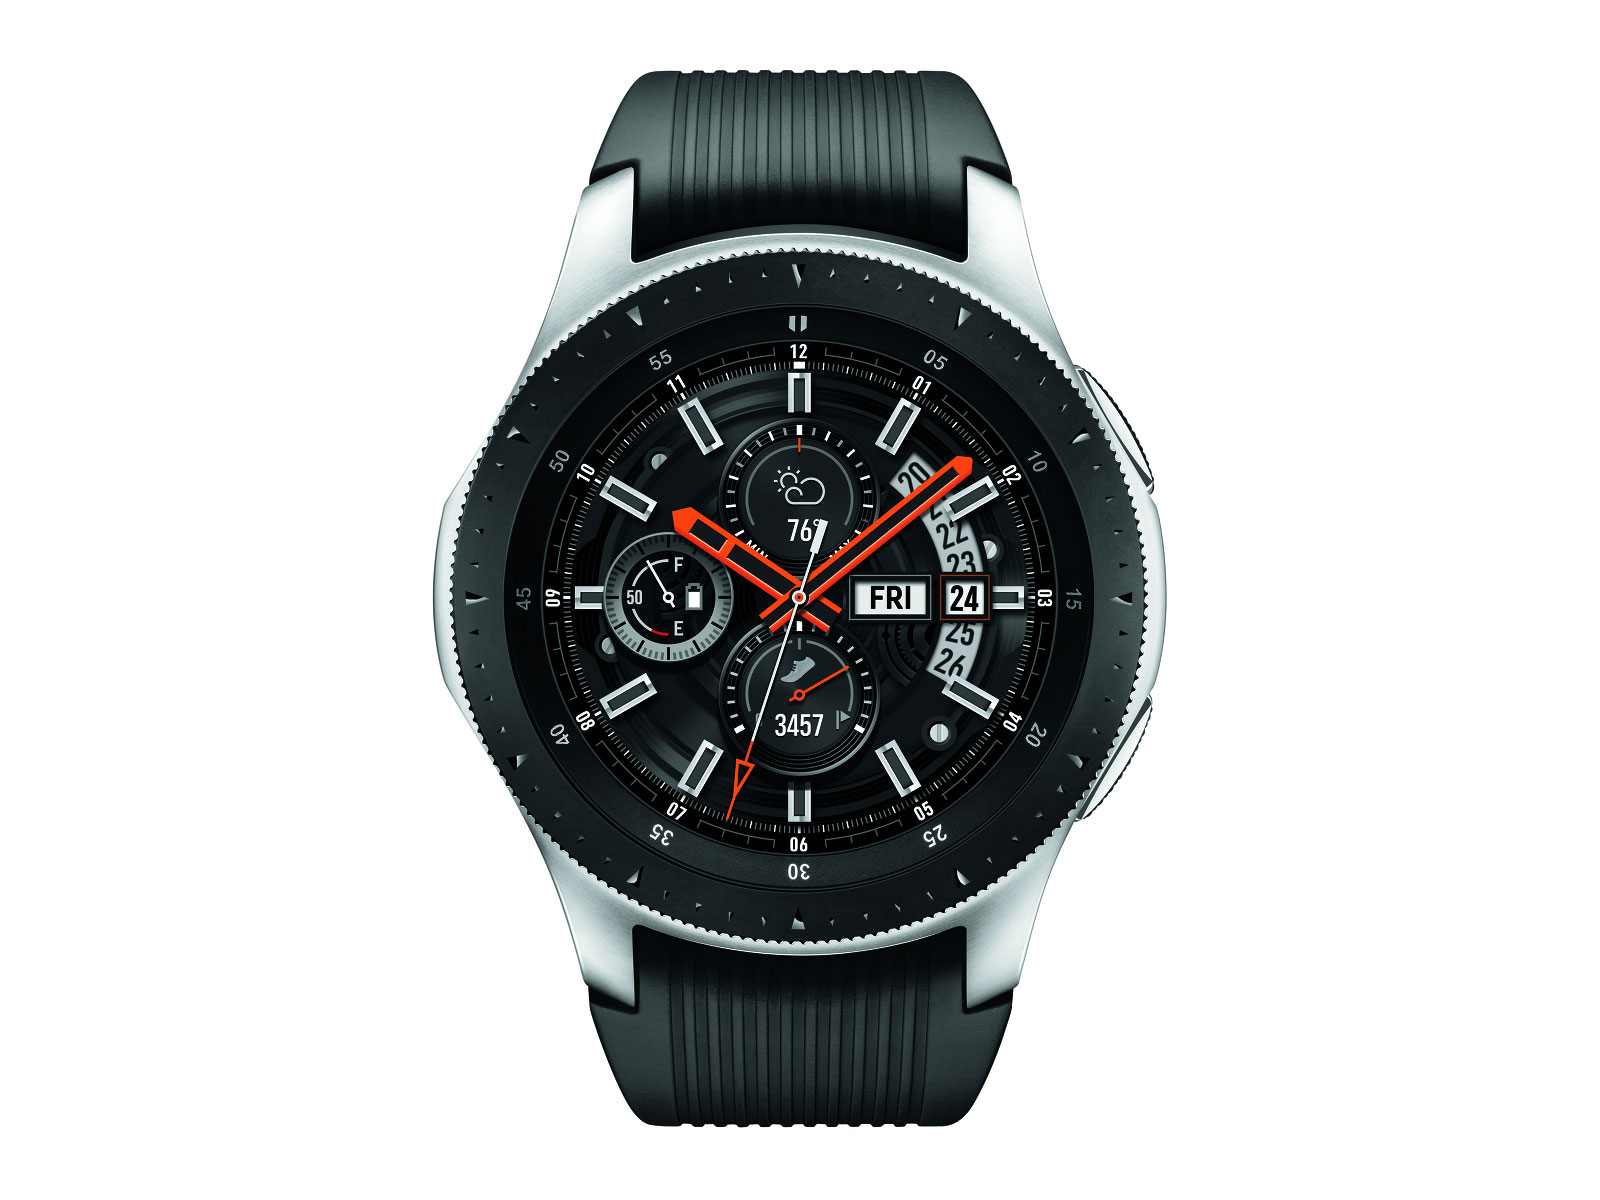 Samsung Galaxy Watch (46mm) Silver (Bluetooth) Smartwatch